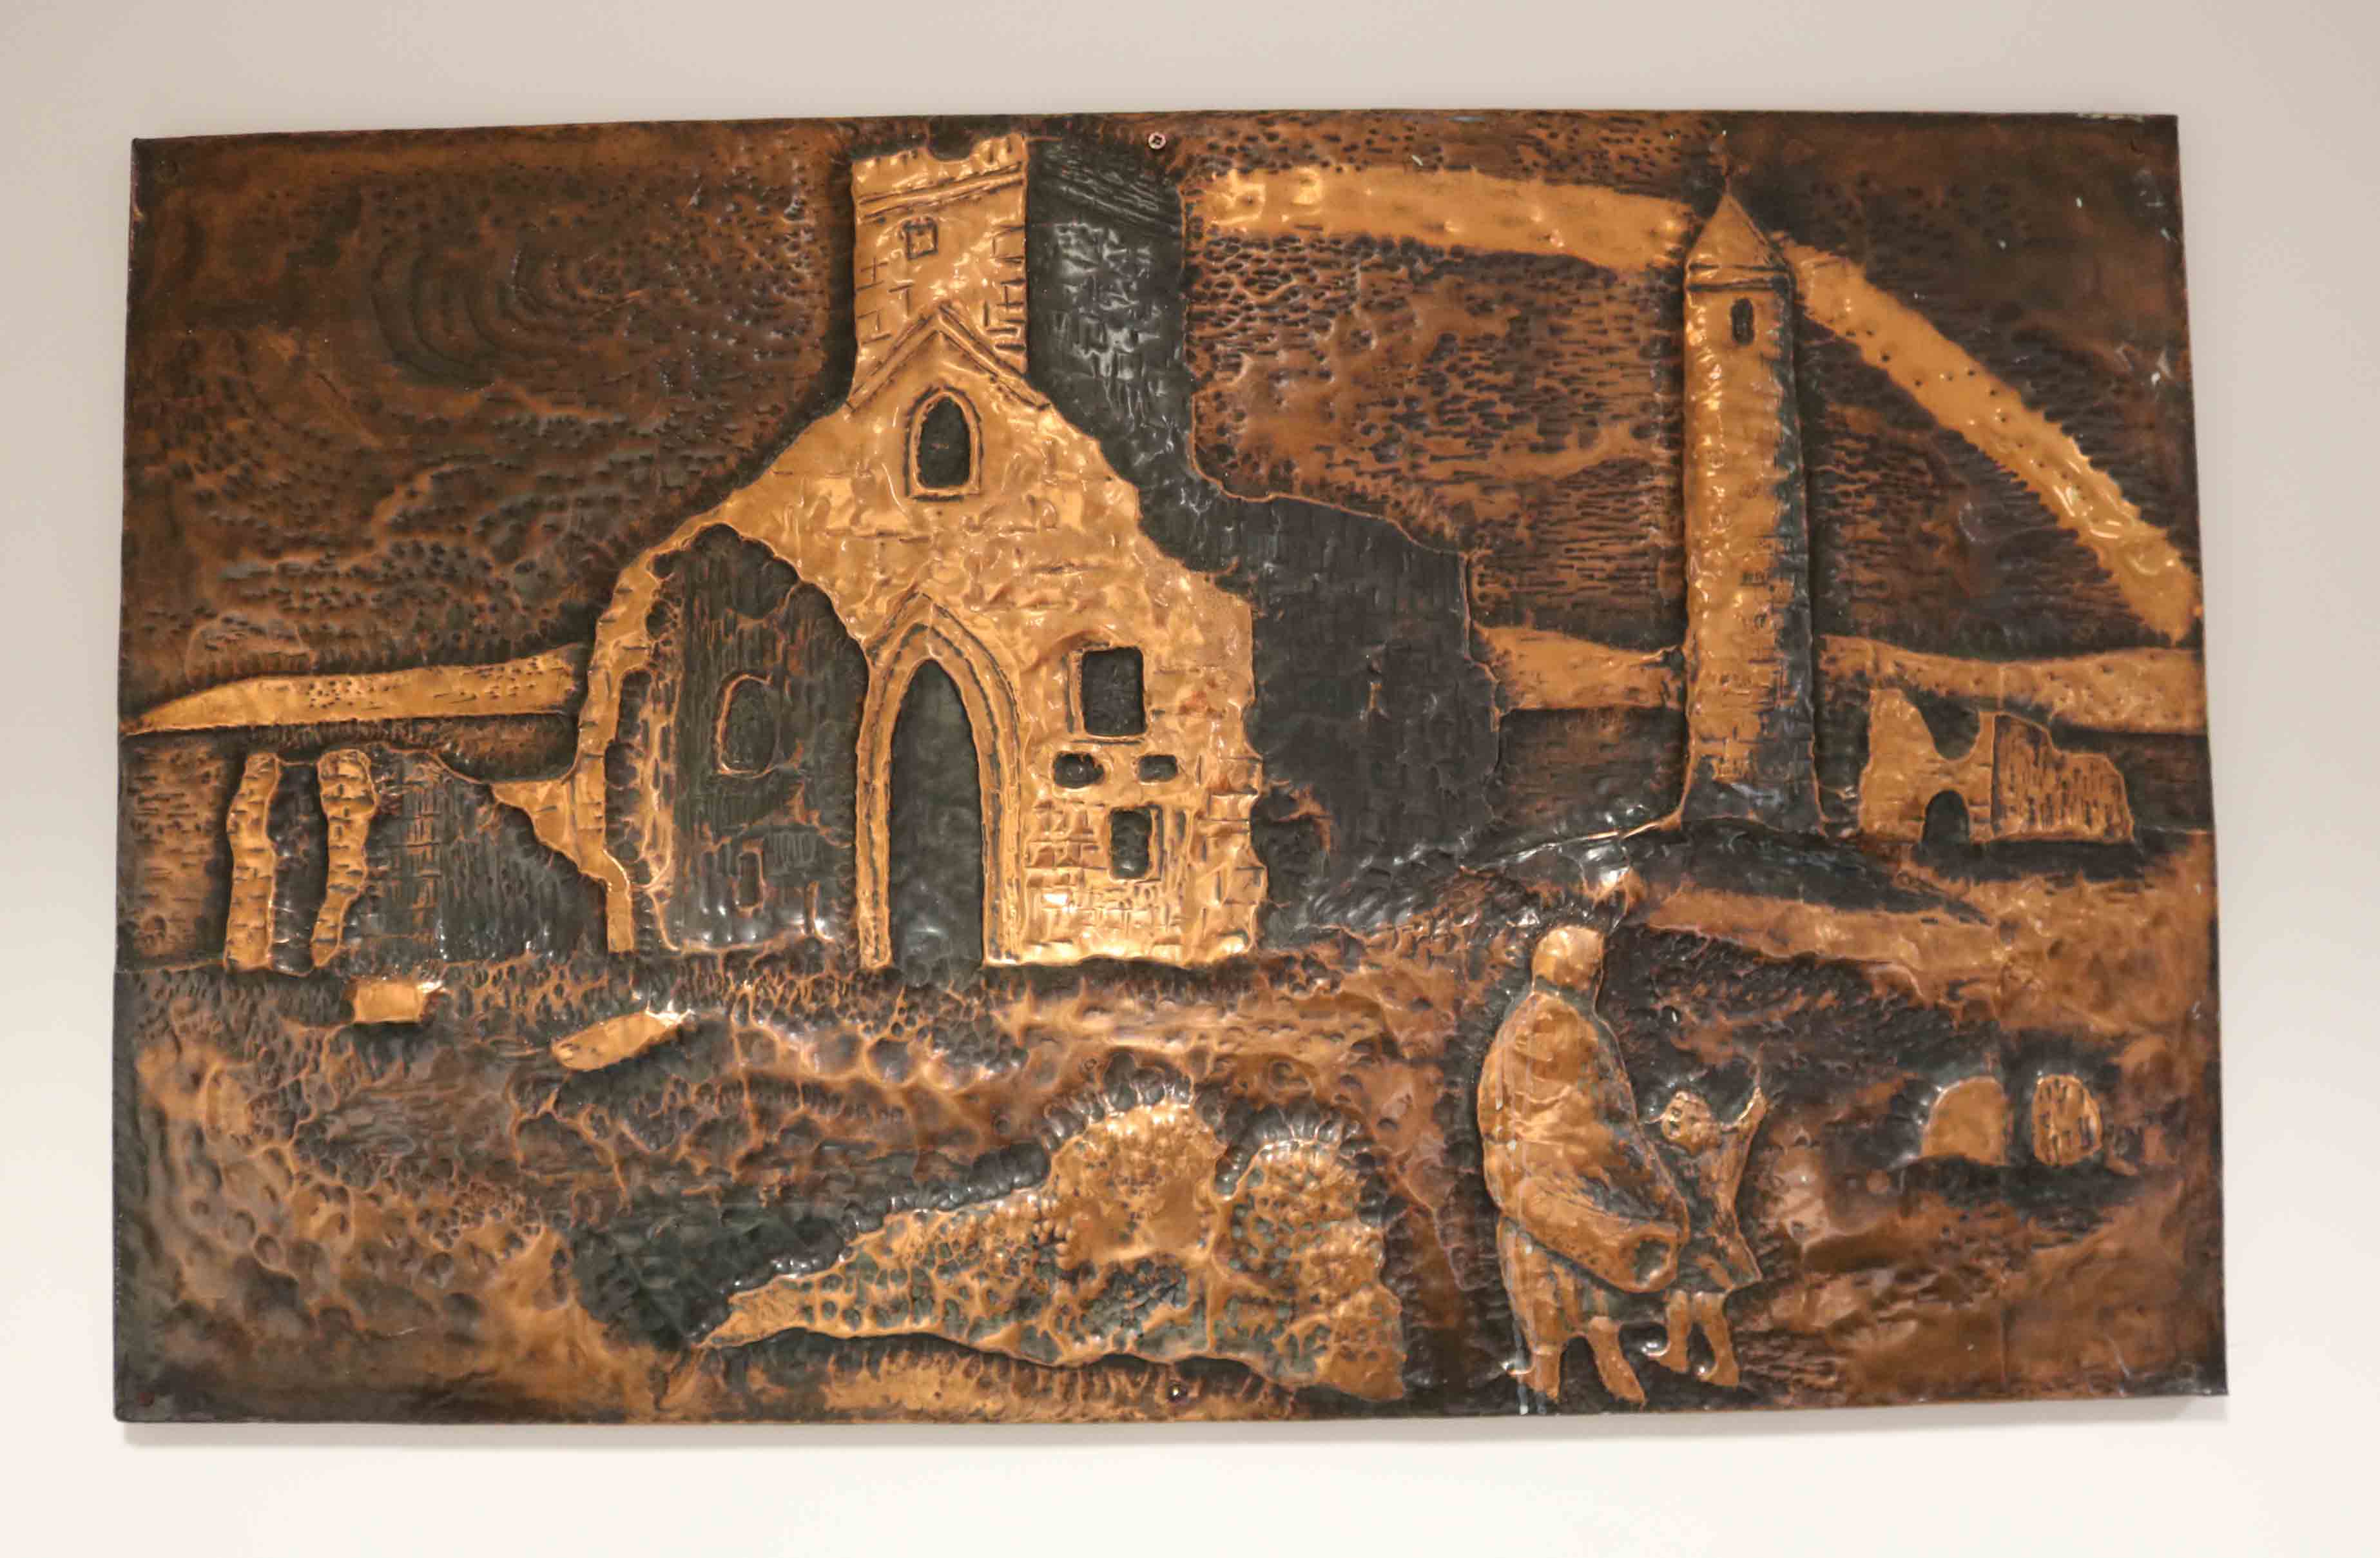 Art depicting the monastic settlement at Devenish.